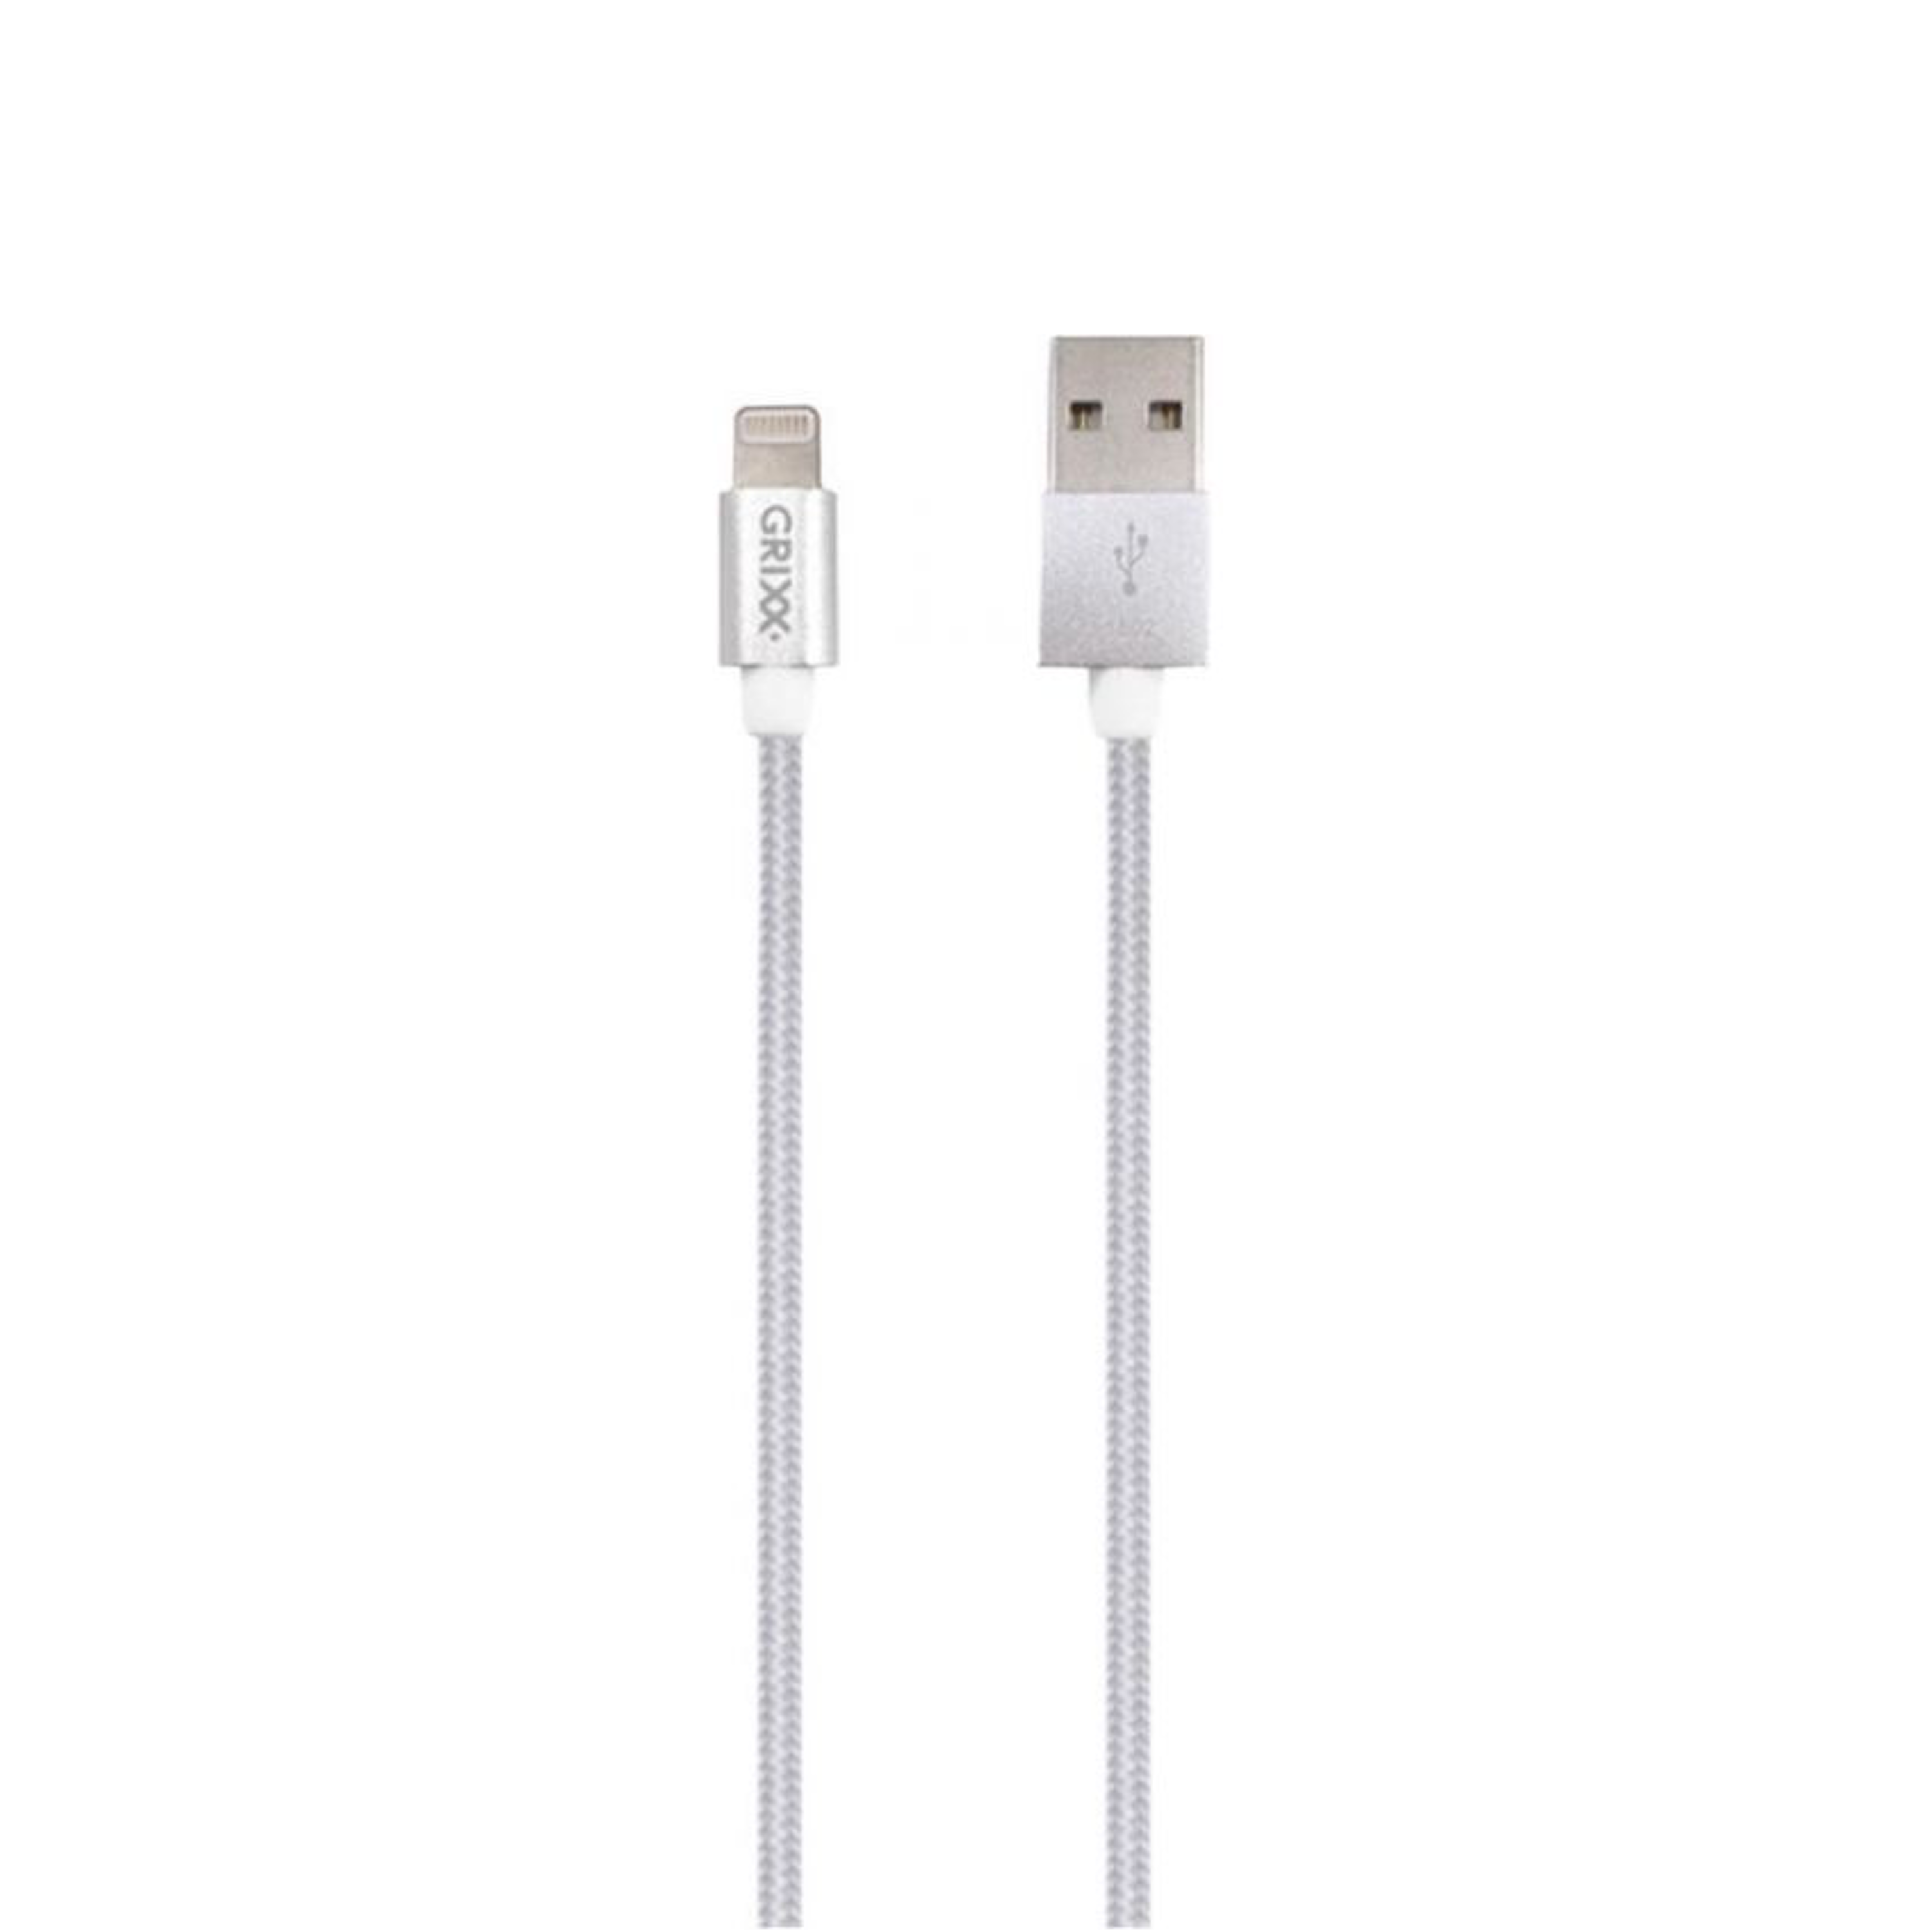 PHILIPS Grixx Weiß Lightning USB-A auf Kabel Optimum